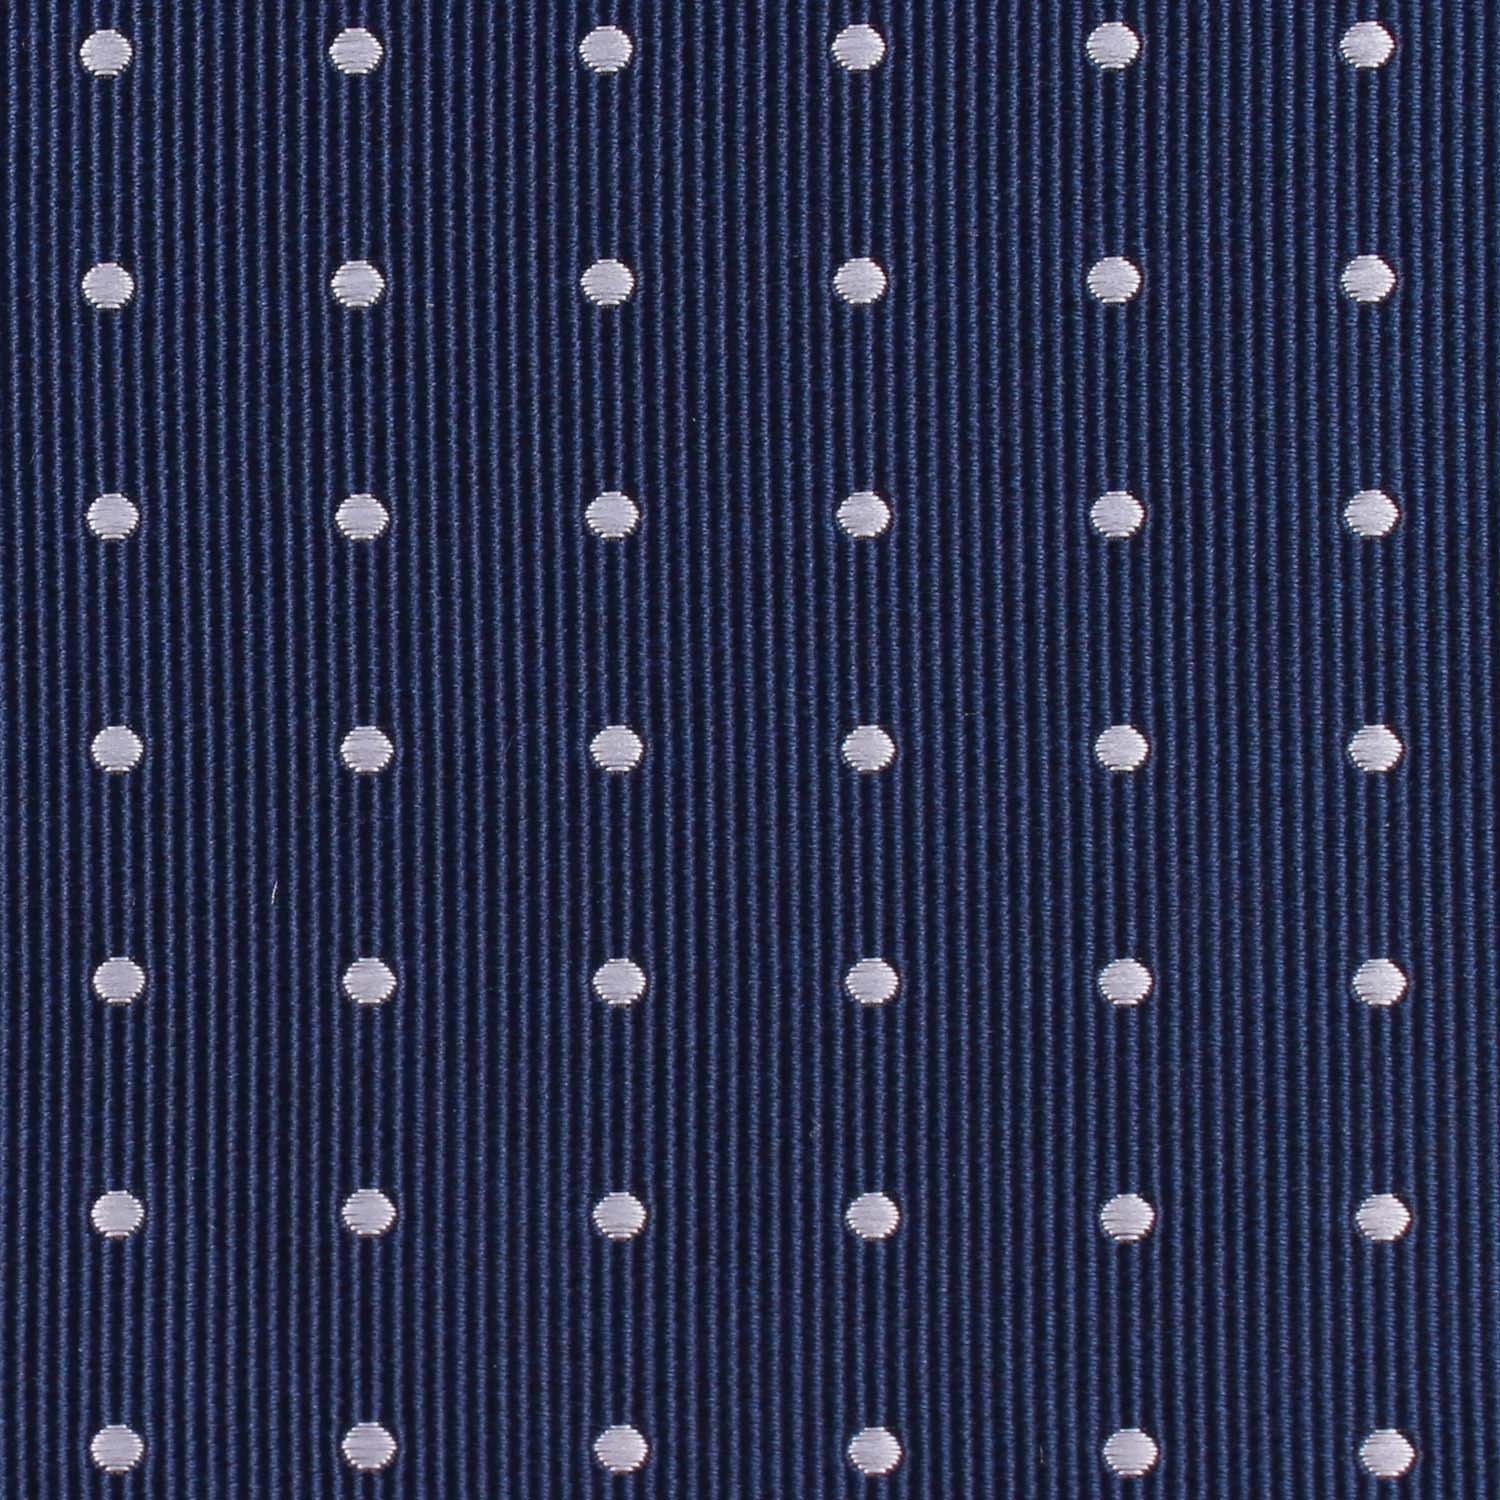 The OTAA Navy Blue with White Polka Dots Fabric Self Tie Diamond Tip Bow Tie M131The OTAA Navy Blue with White Polka Dots Fabric Self Tie Diamond Tip Bow Tie M131